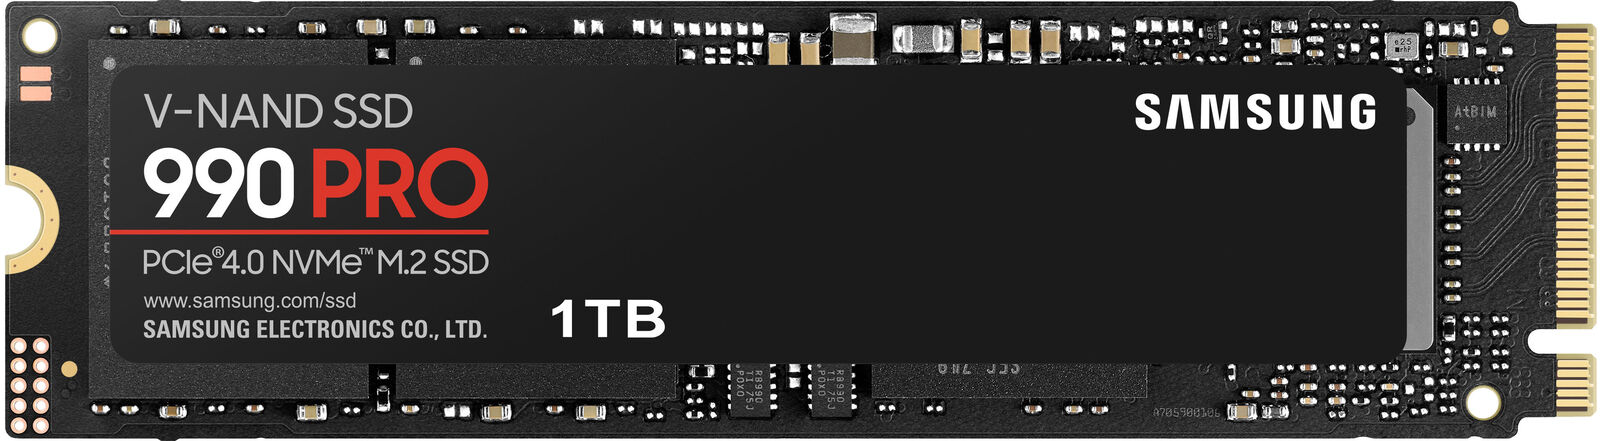 Samsung - Geek Squad Certified Refurbished 990 PRO 1TB Internal SSD PCle Gen ...